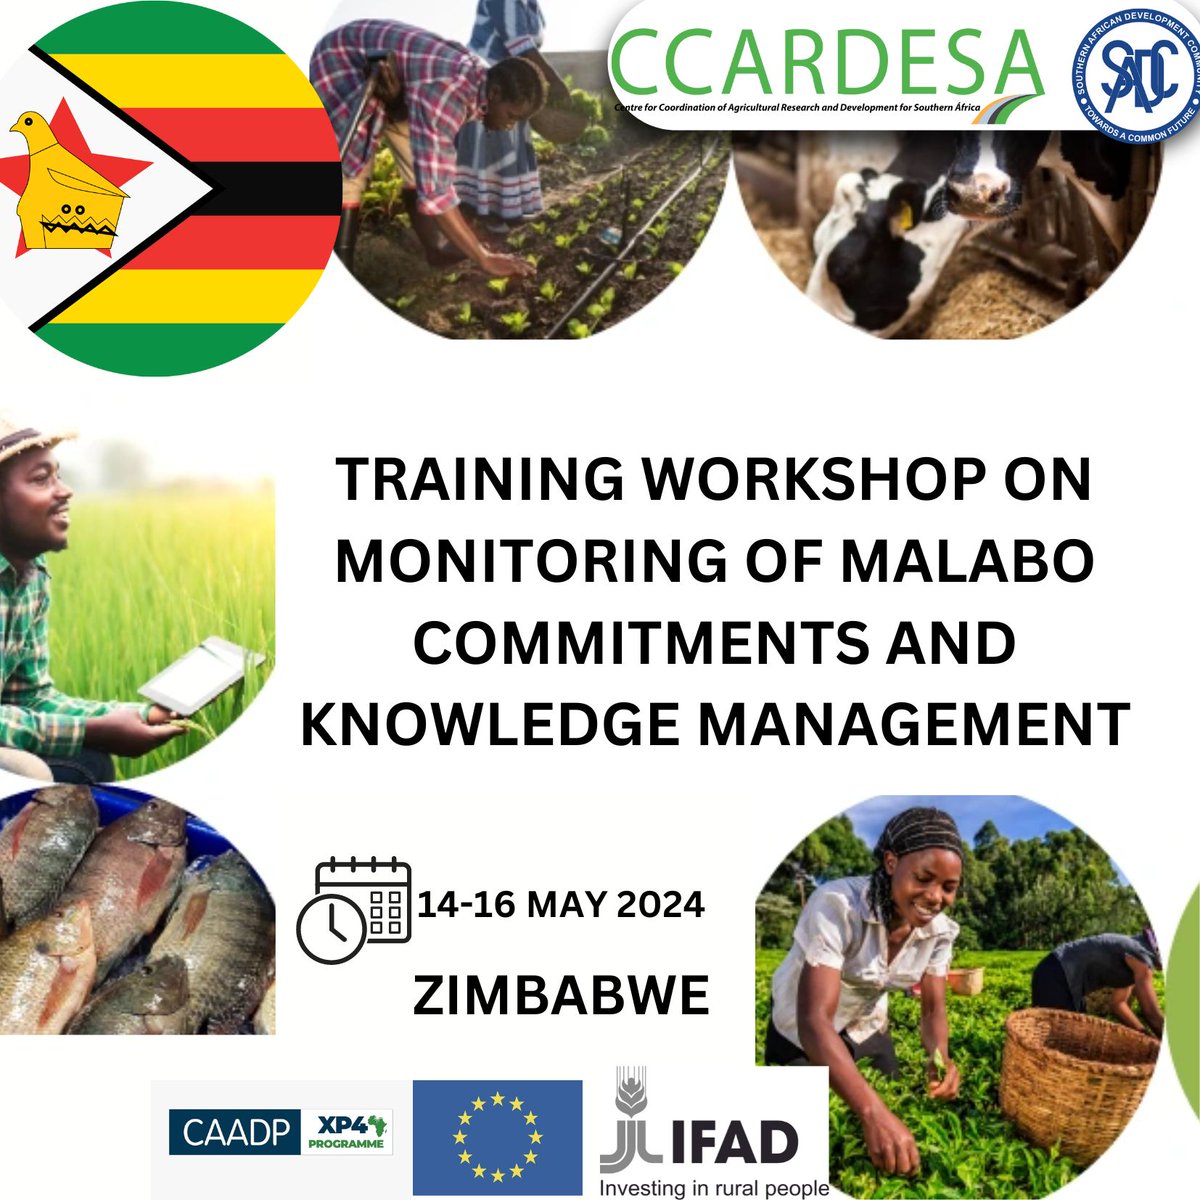 Happening tomorrow at Harare, Zimbabwe training workshop on Malabo Commitments and Knowledge Management.
#CCARDESA #SADC #Fara #malabocommitment #knowledgemanagement #Harare #Zimbabwe #trainingworkshop